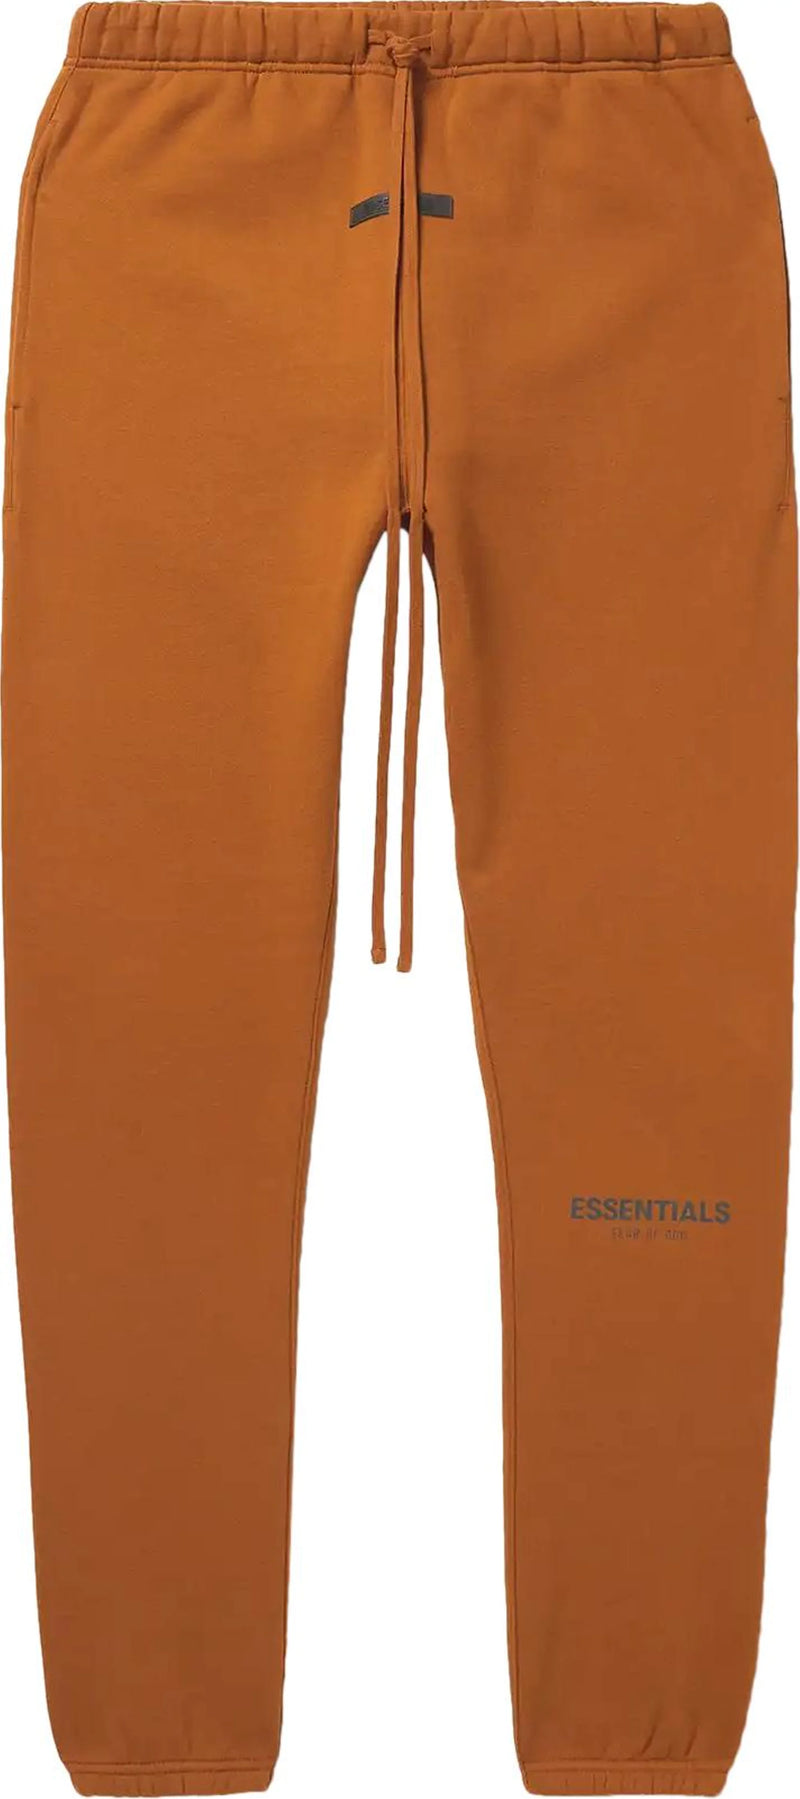 Essentials Rust Brown Pants